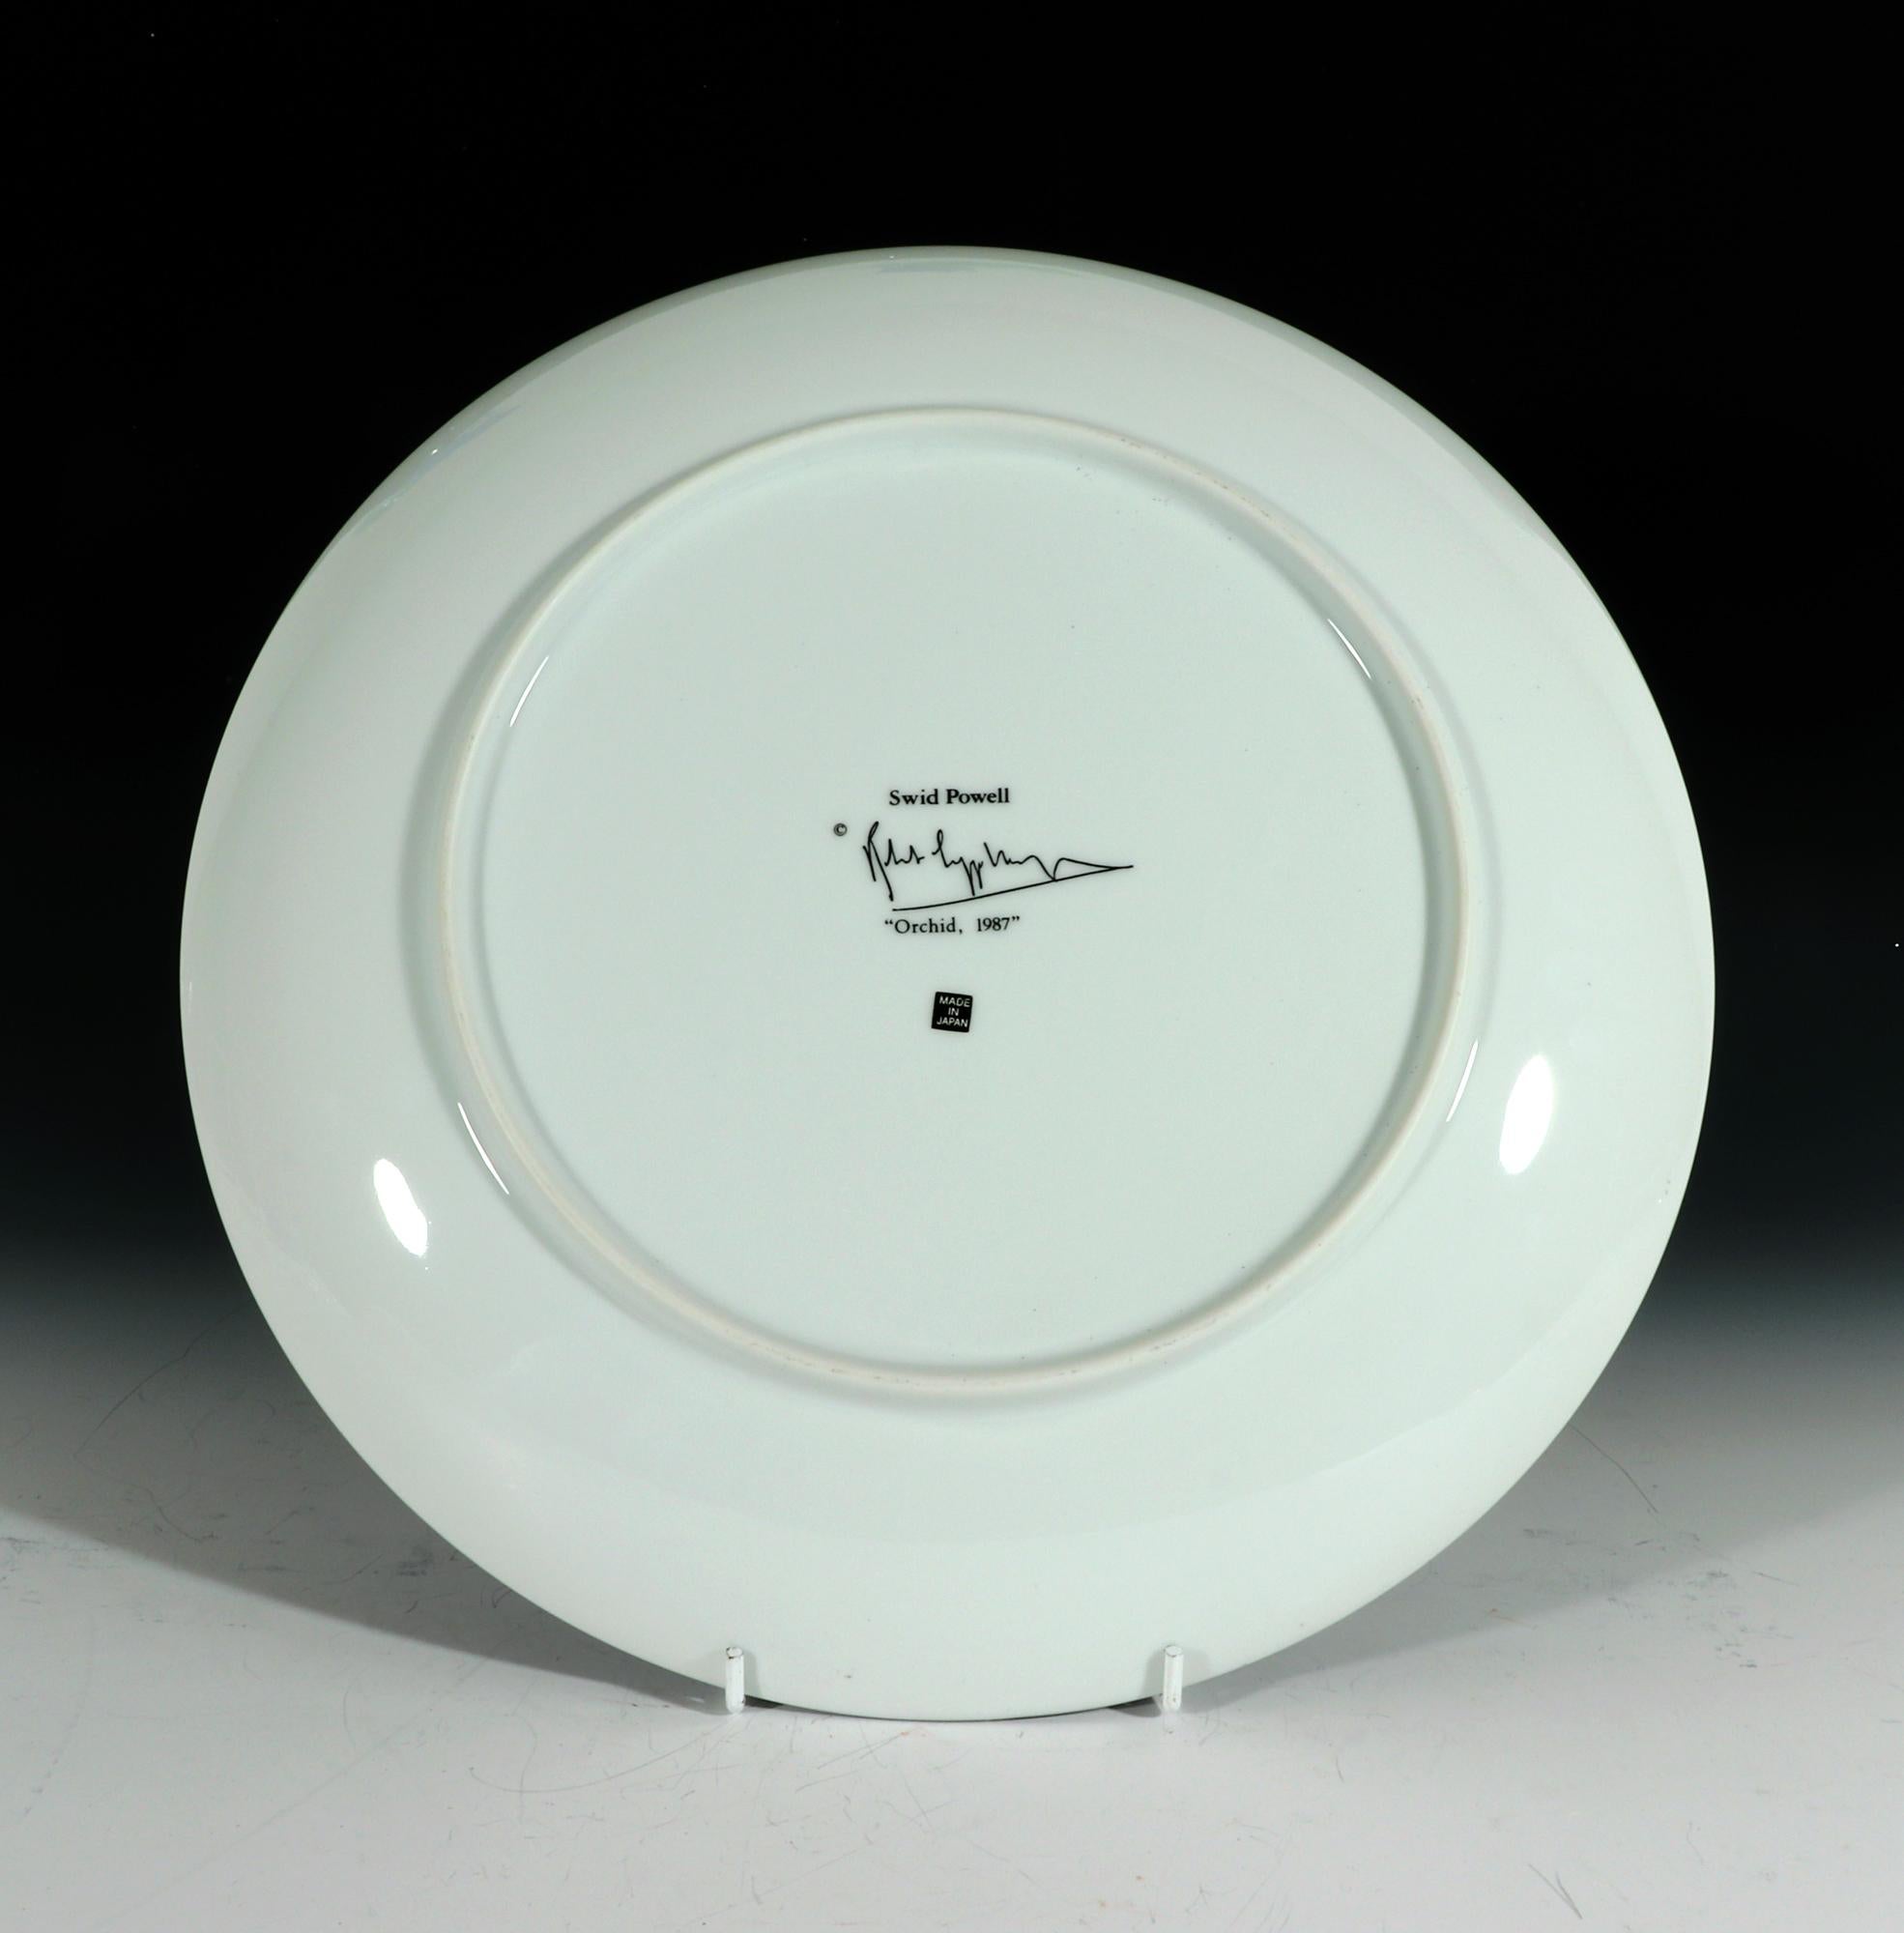 American Robert Mapplethorpe Botanical Porcelain Plate, Orchid, 1987 For Sale